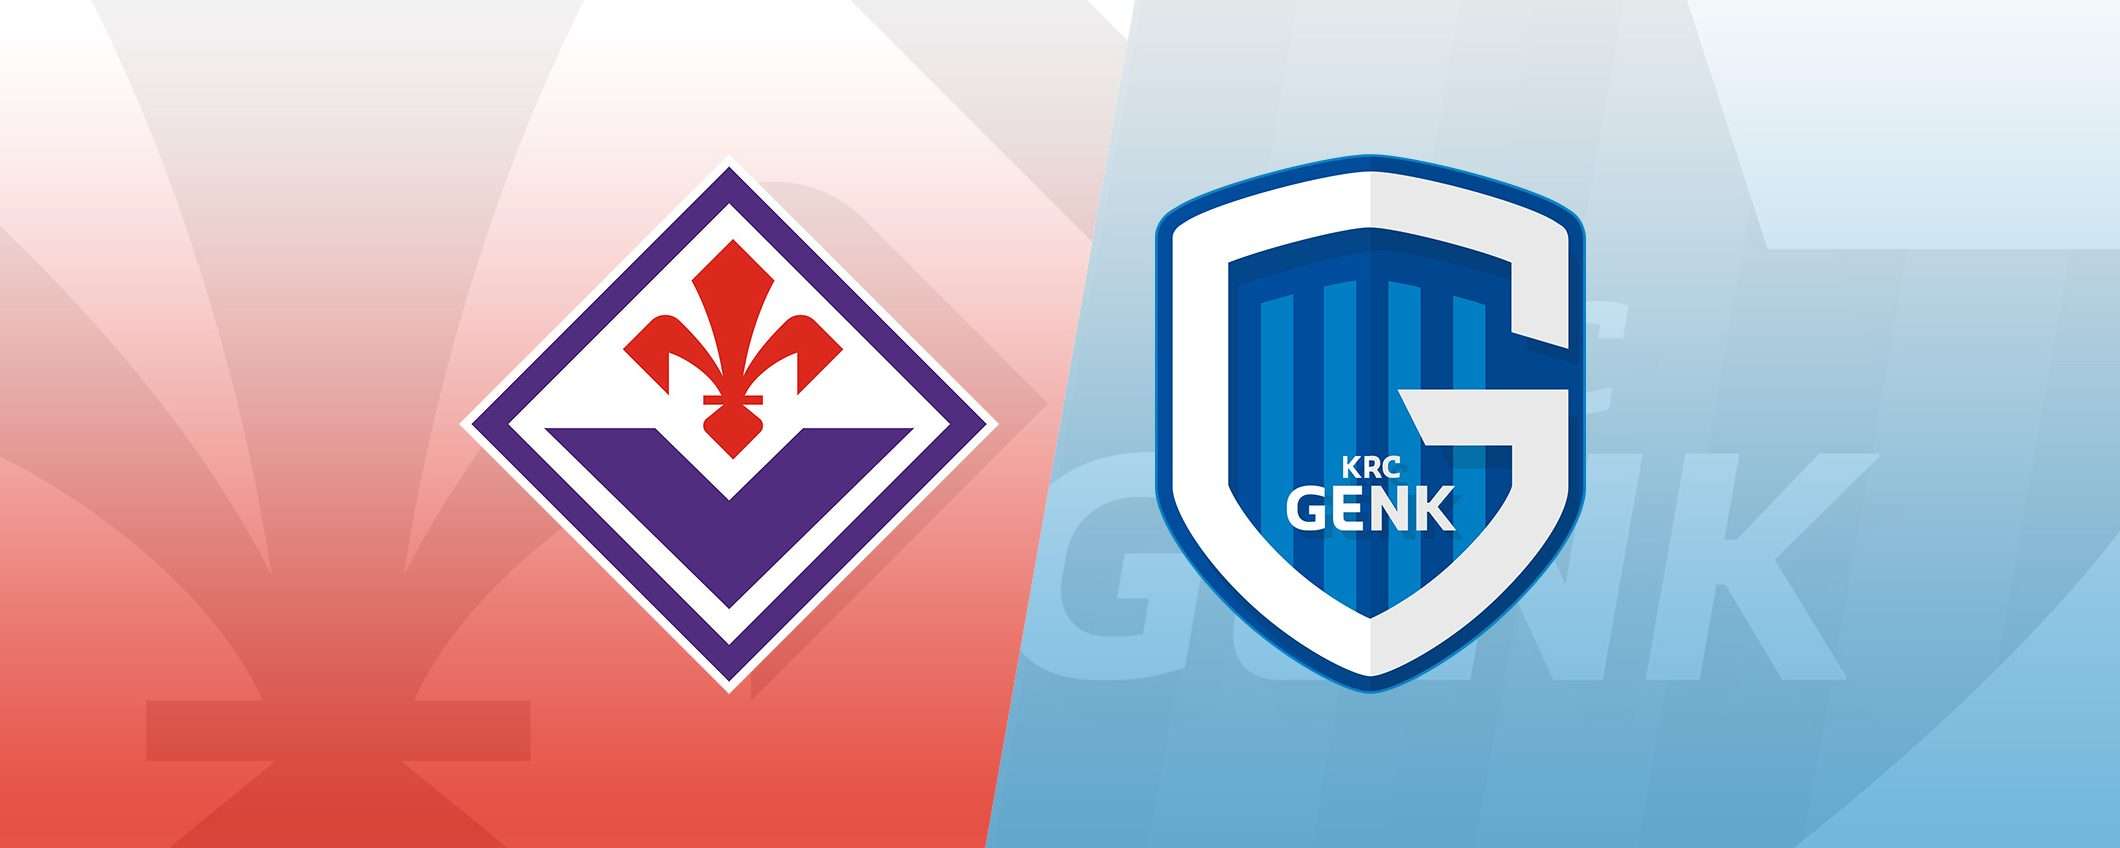 Come vedere Fiorentina-Genk in streaming (Conference)